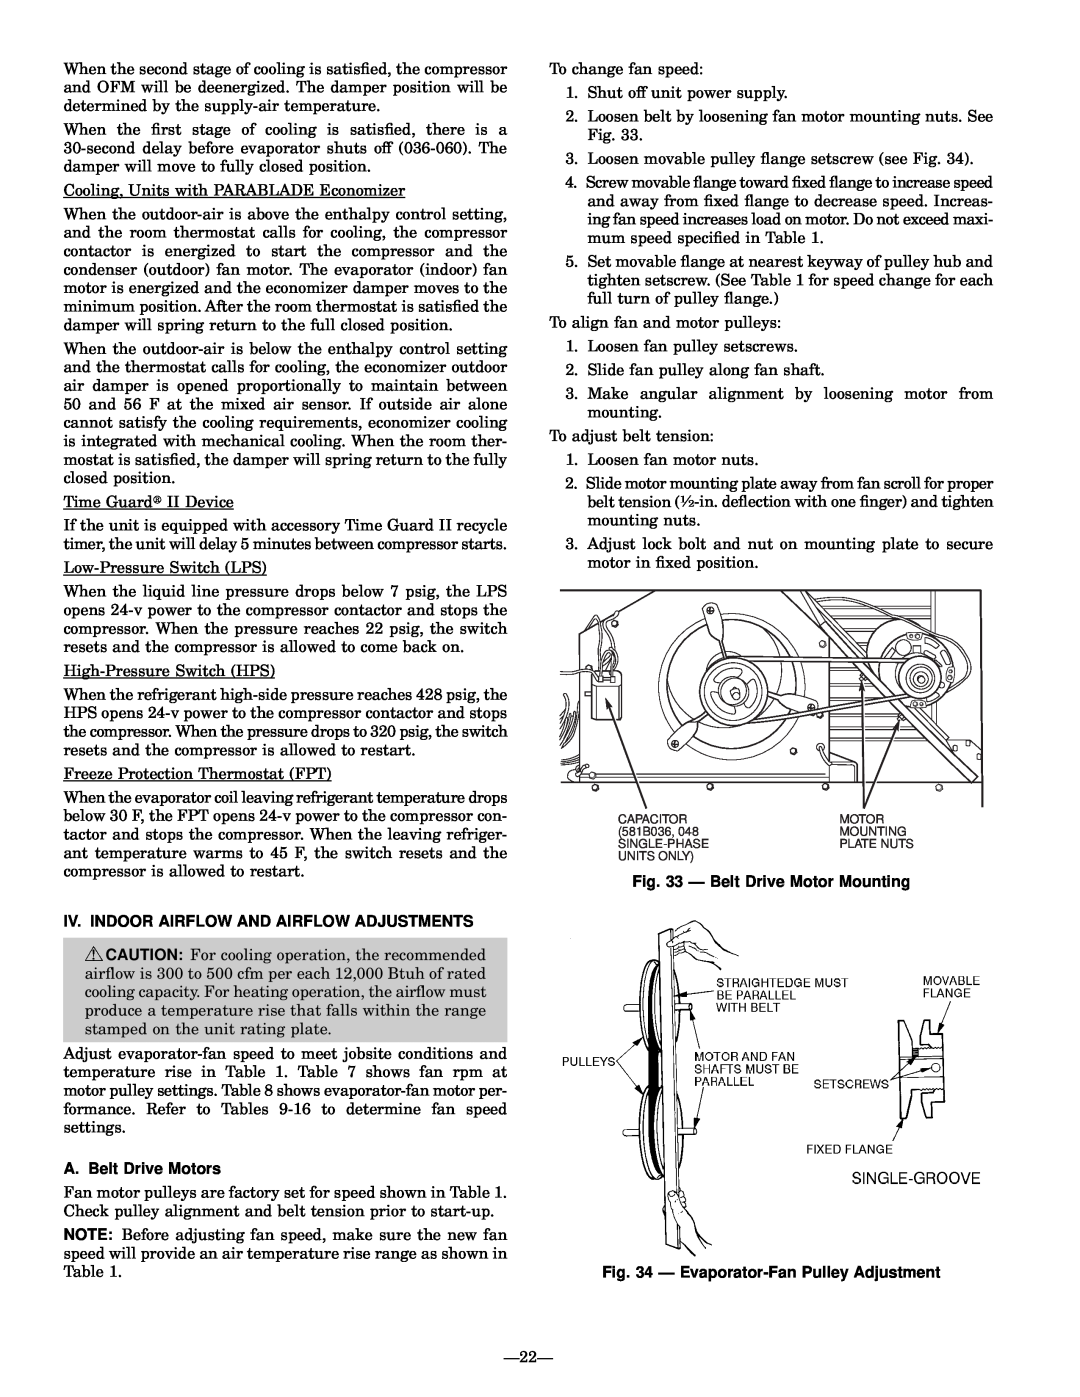 Bryant 581B Iv. Indoor Airflow And Airflow Adjustments, A. Belt Drive Motors, Ð Belt Drive Motor Mounting 